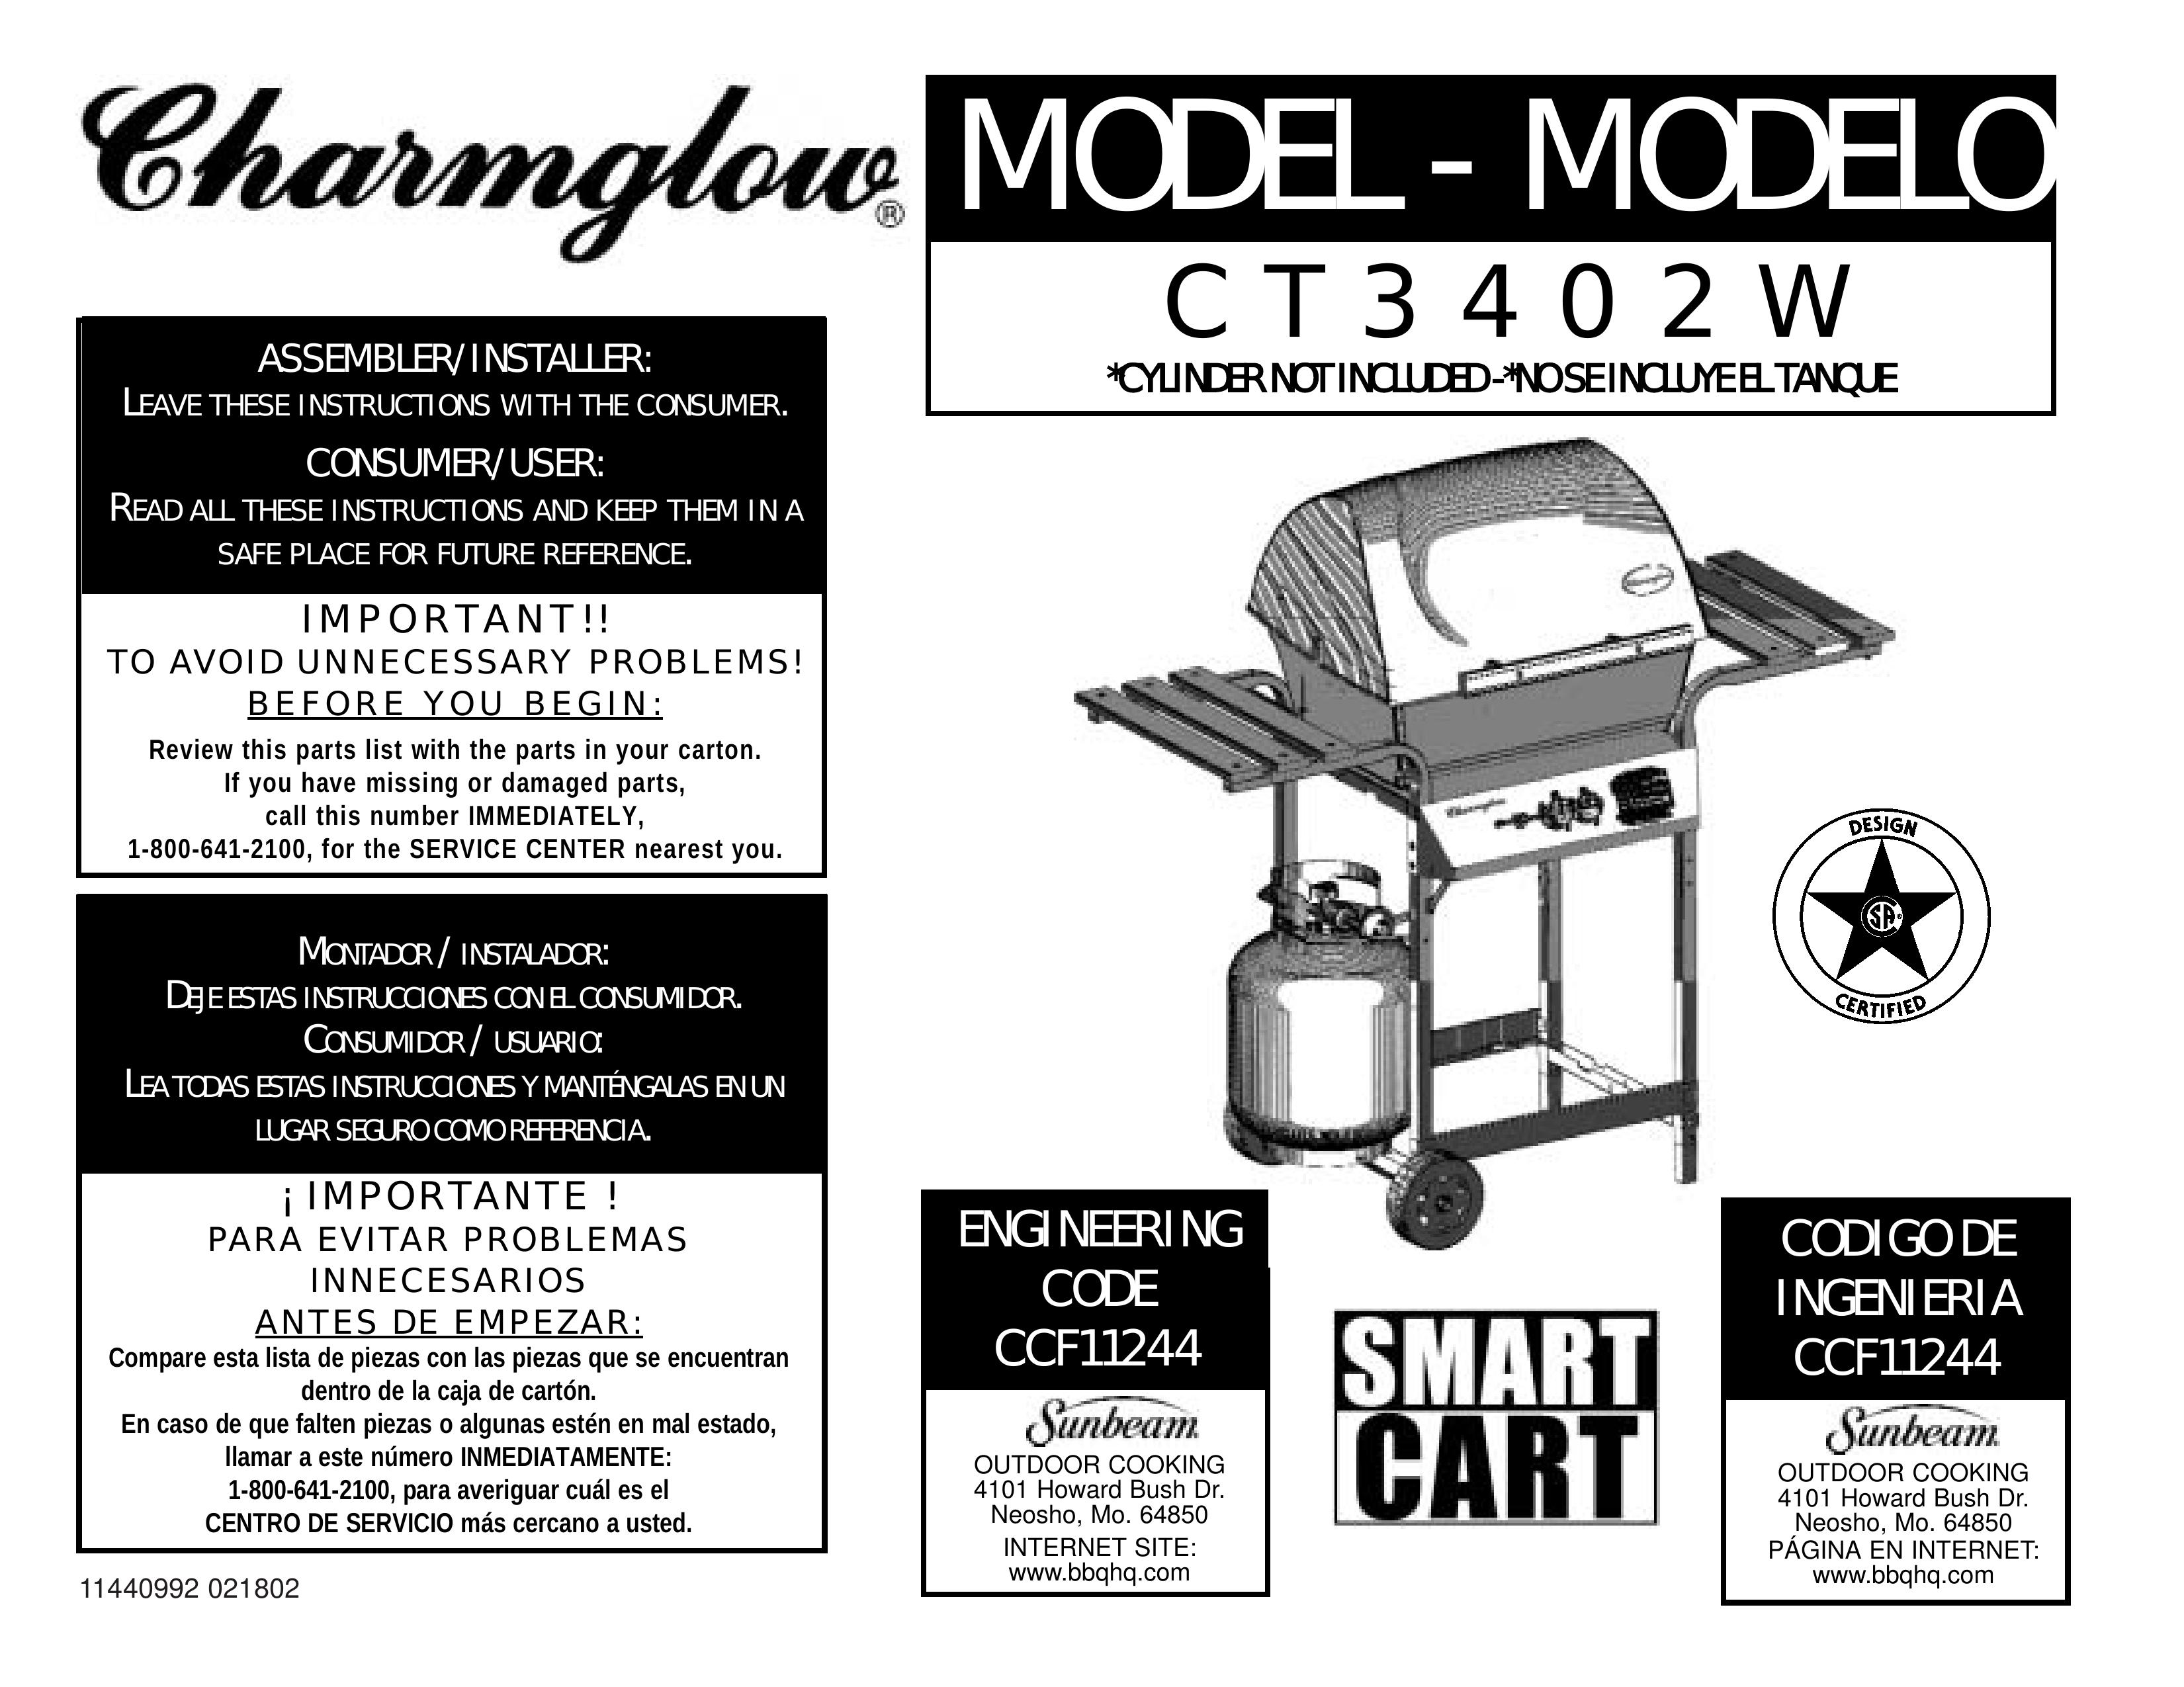 Charmglow CT3402W Gas Grill User Manual